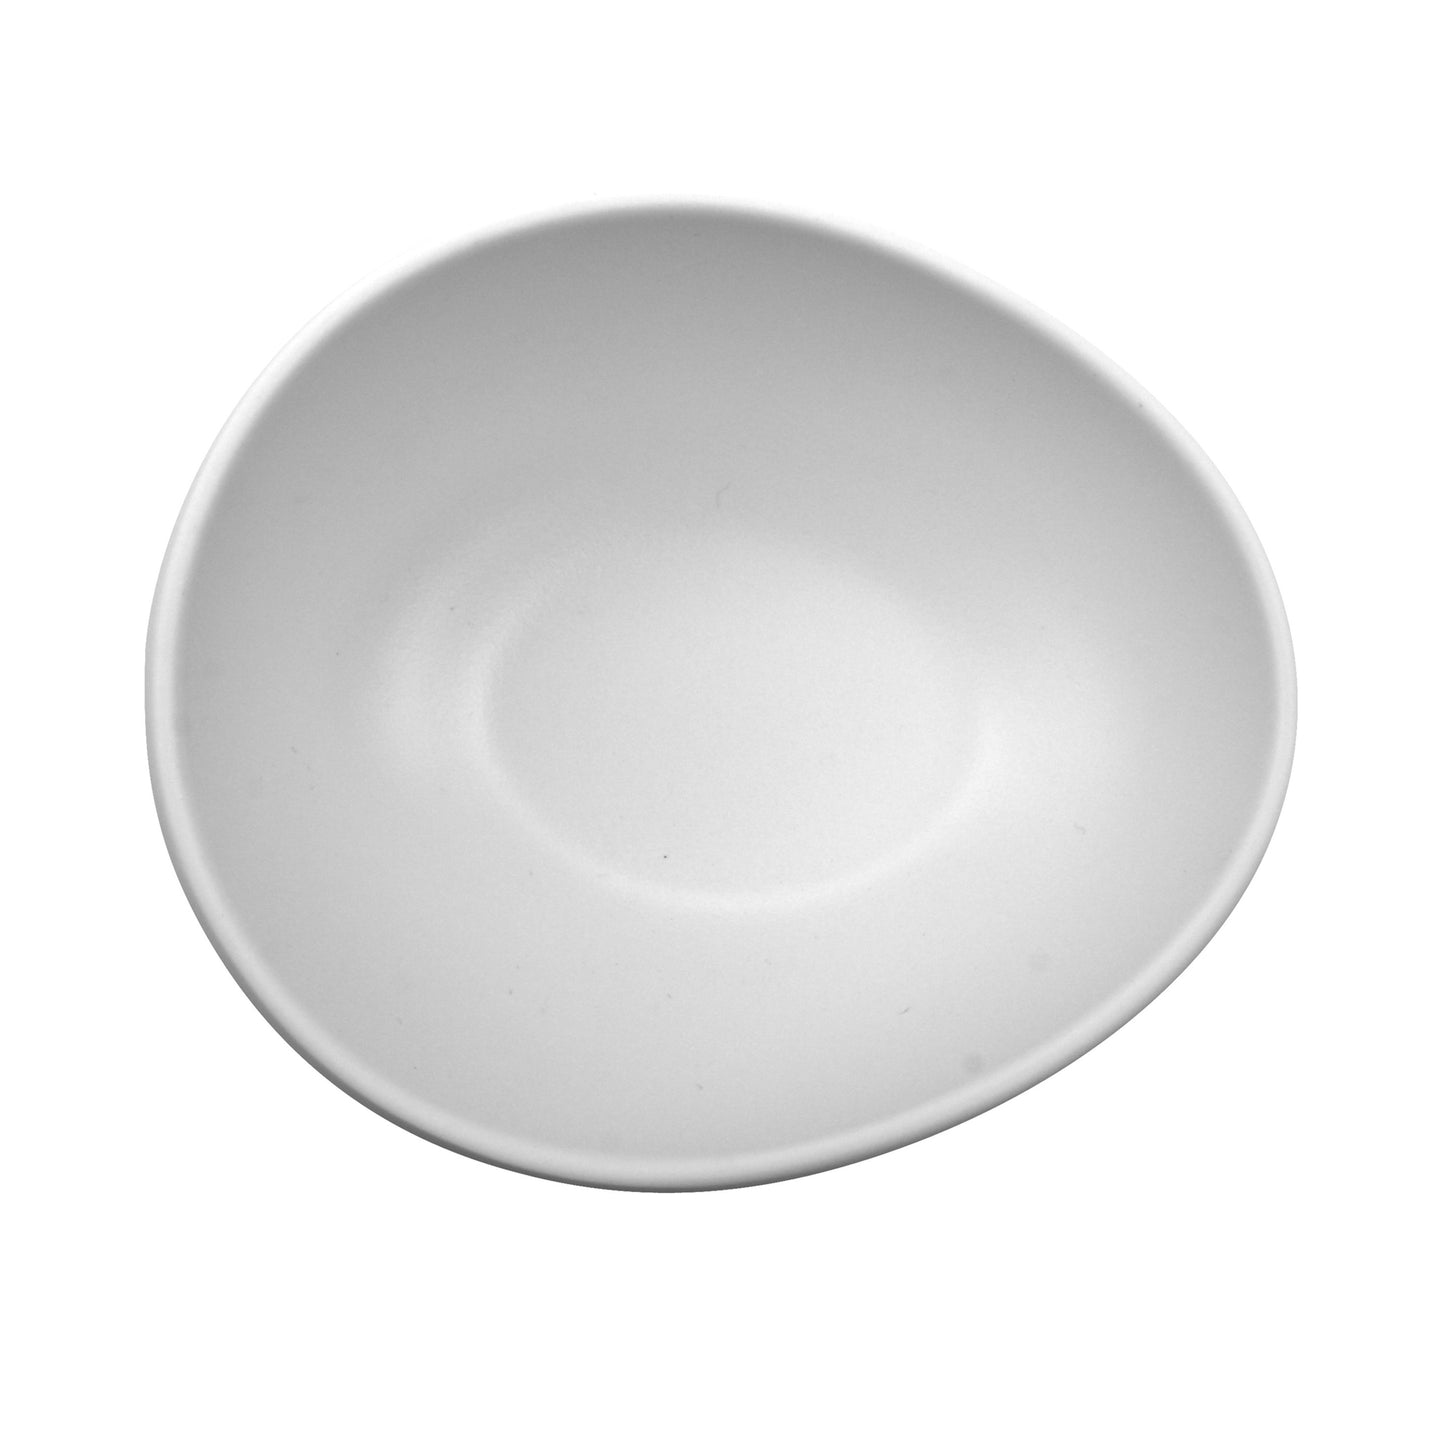 8 oz. White, Melamine, Small Side Dish/Soup Bowl, (11 oz. rim-full), 1.8" H, (2.1" Max H), 5.1" L x 4.4" W, G.E.T. Riverstone (12 Pack)